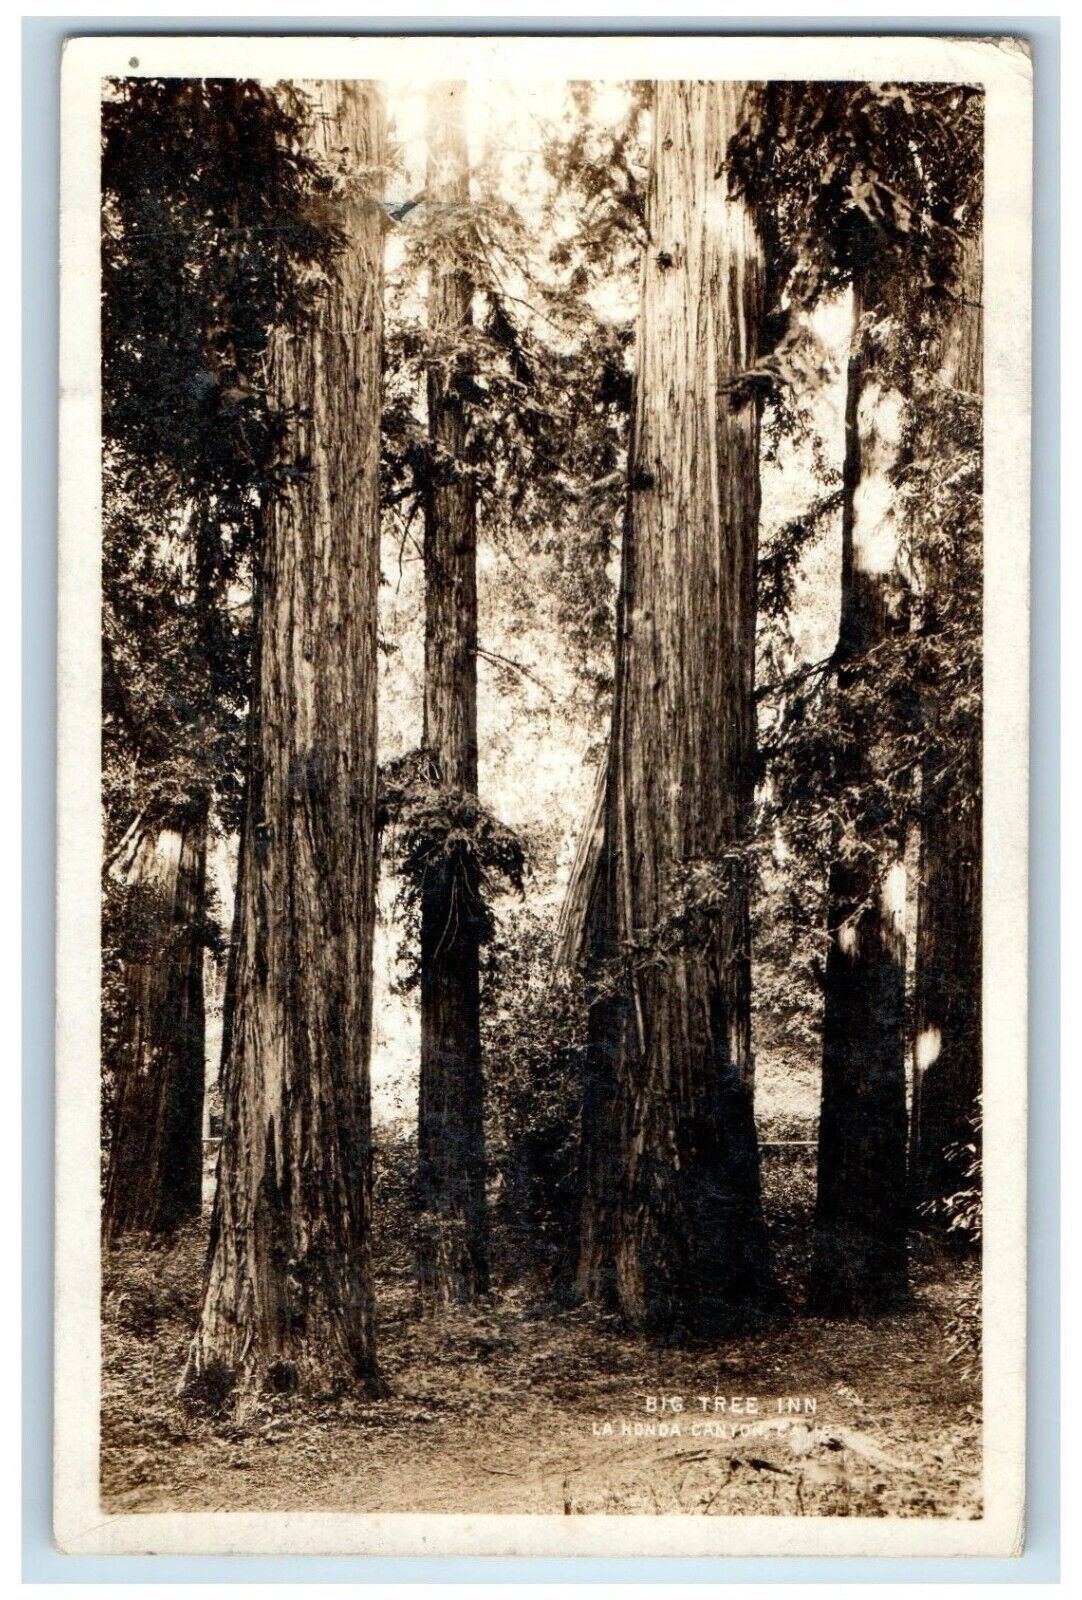 1931 View Of Big Tree Inn La Honda Canyon California CA RPPC Photo Postcard